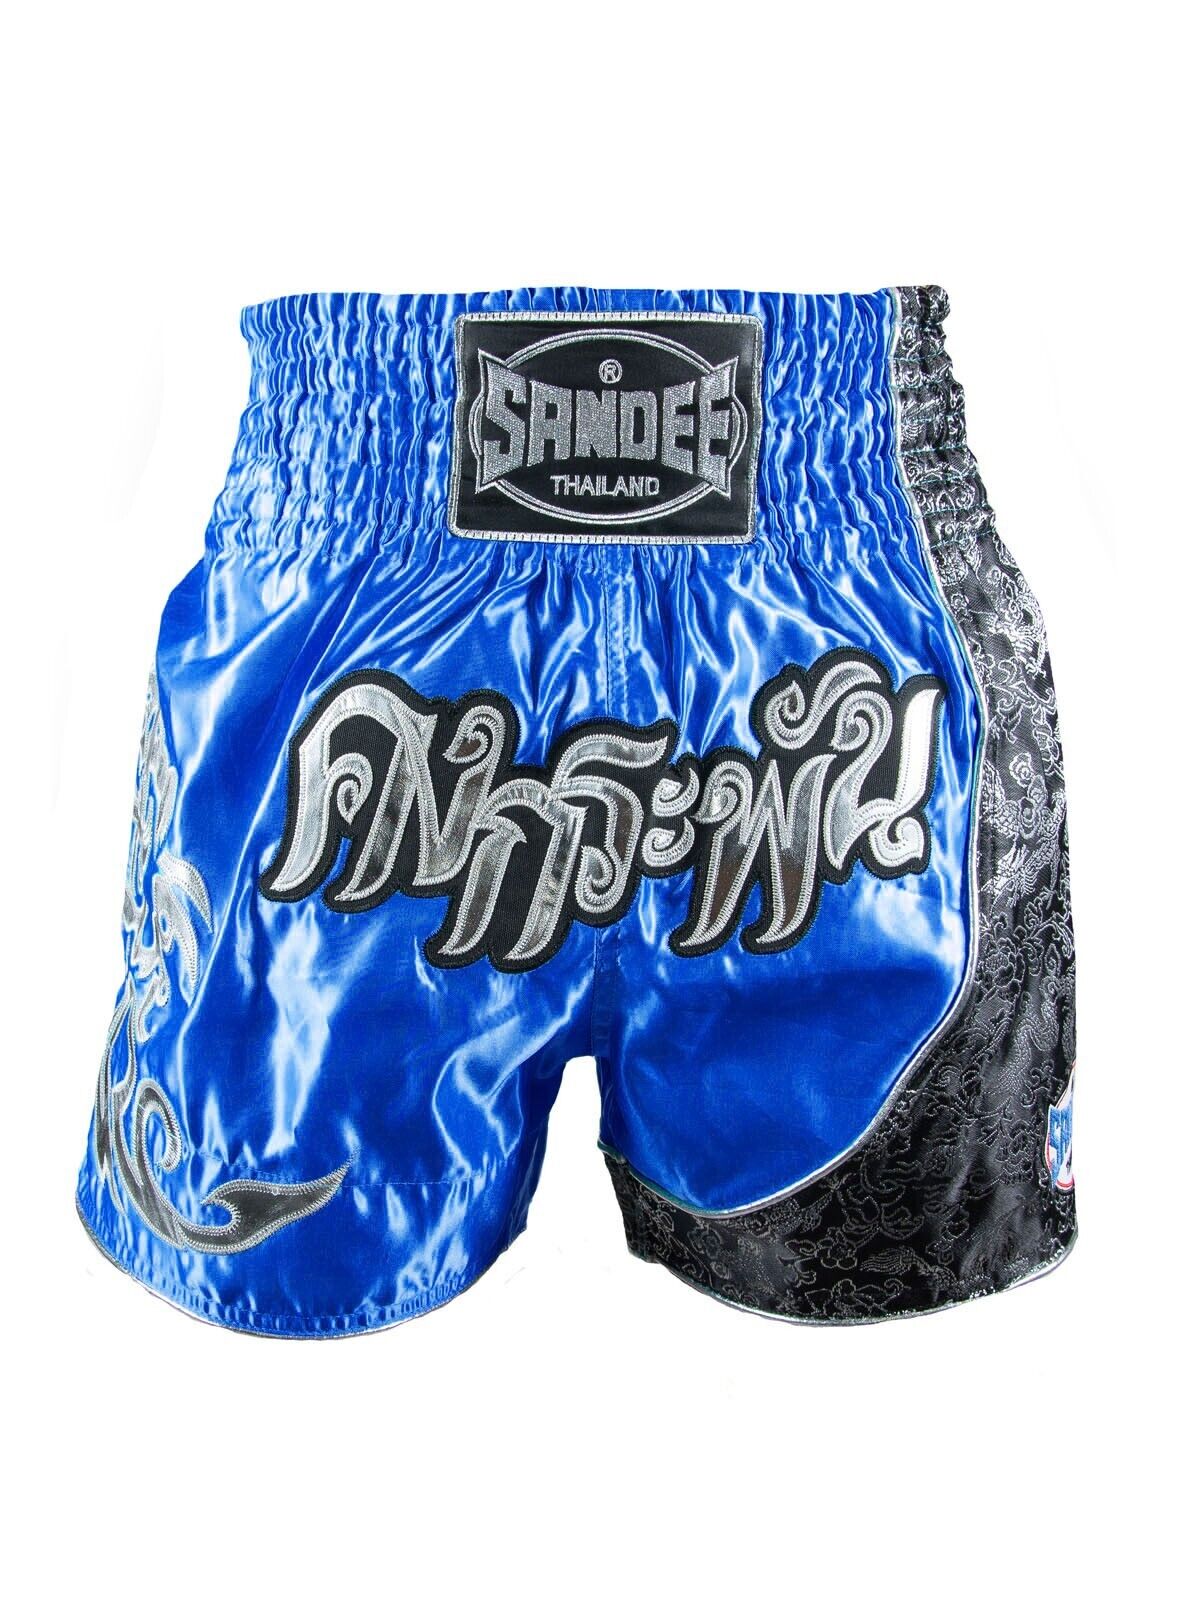 Sandee Unbreakable Muay Thai Boxing Shorts Kickboxing - Budo Online